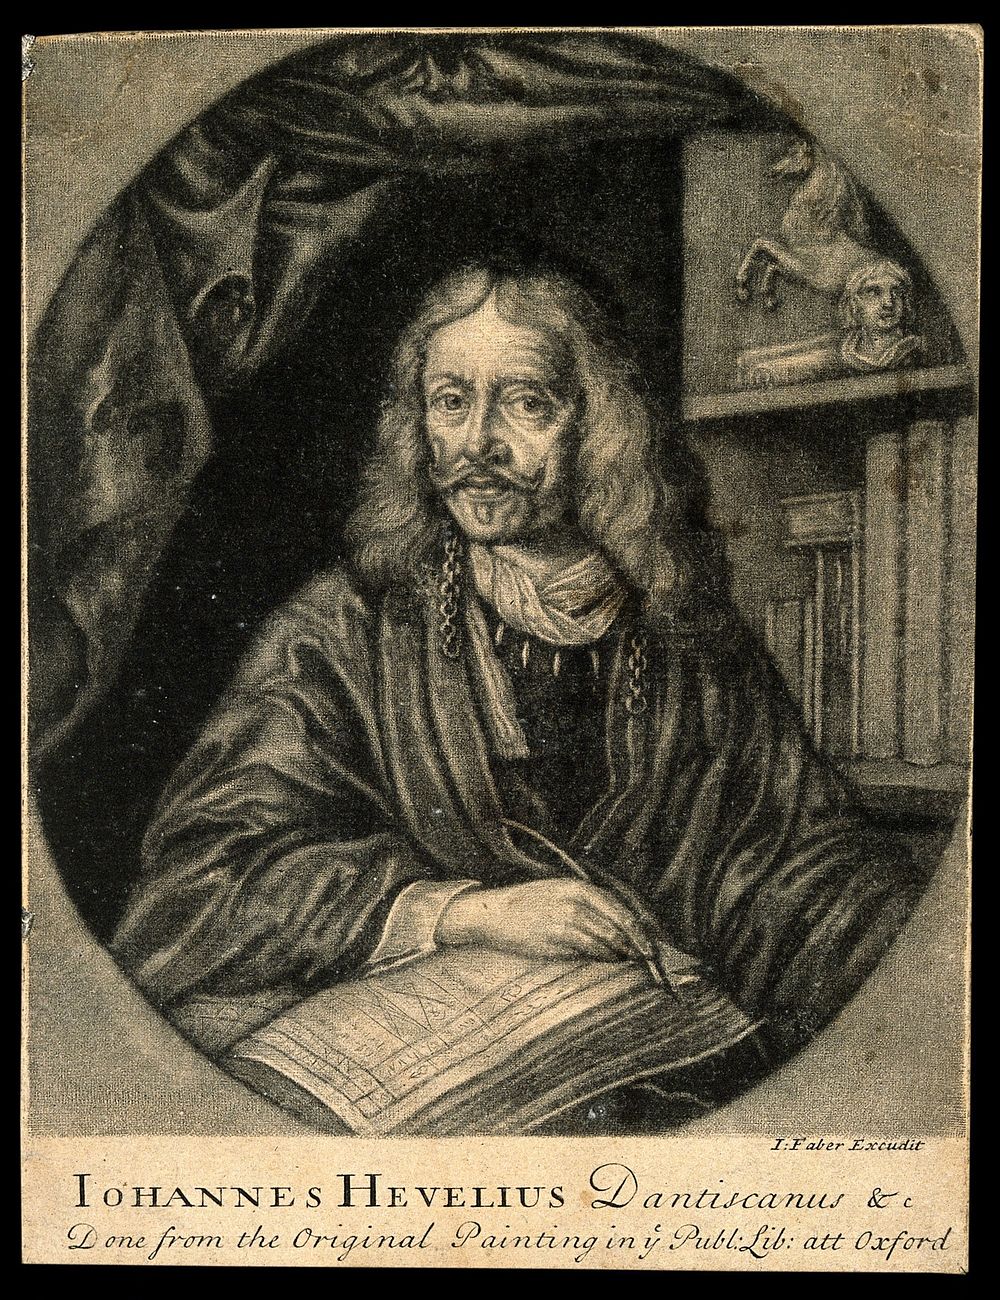 Joannes Hevelius [Hewelke]. Mezzotint by J. Faber after A. Stech, 1677.